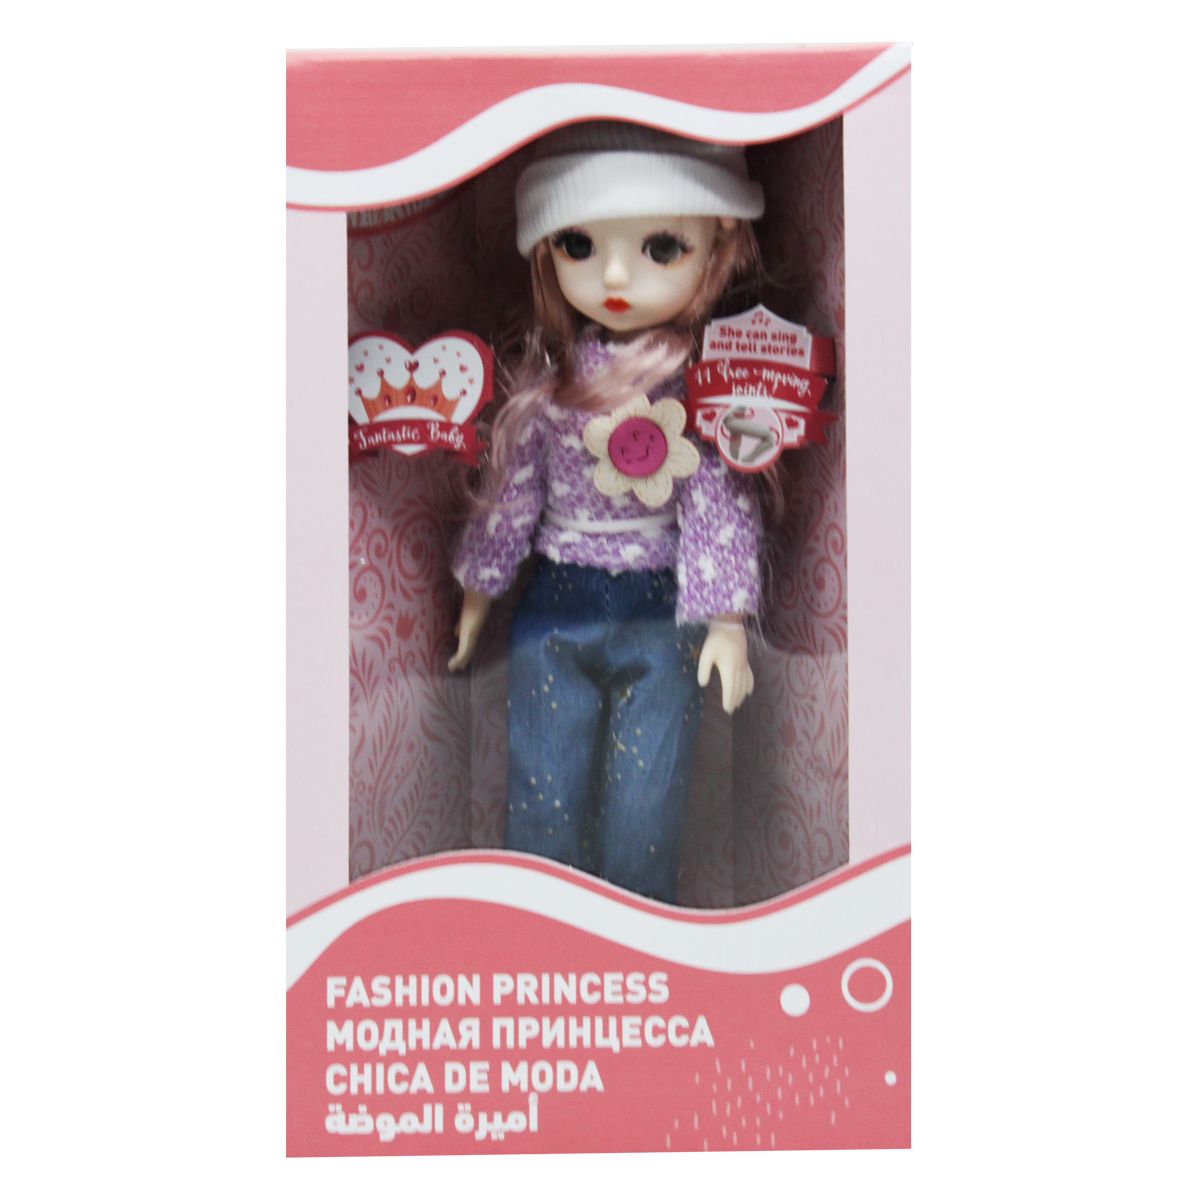 Поющая кукла "Fashion Princess" Вид 2